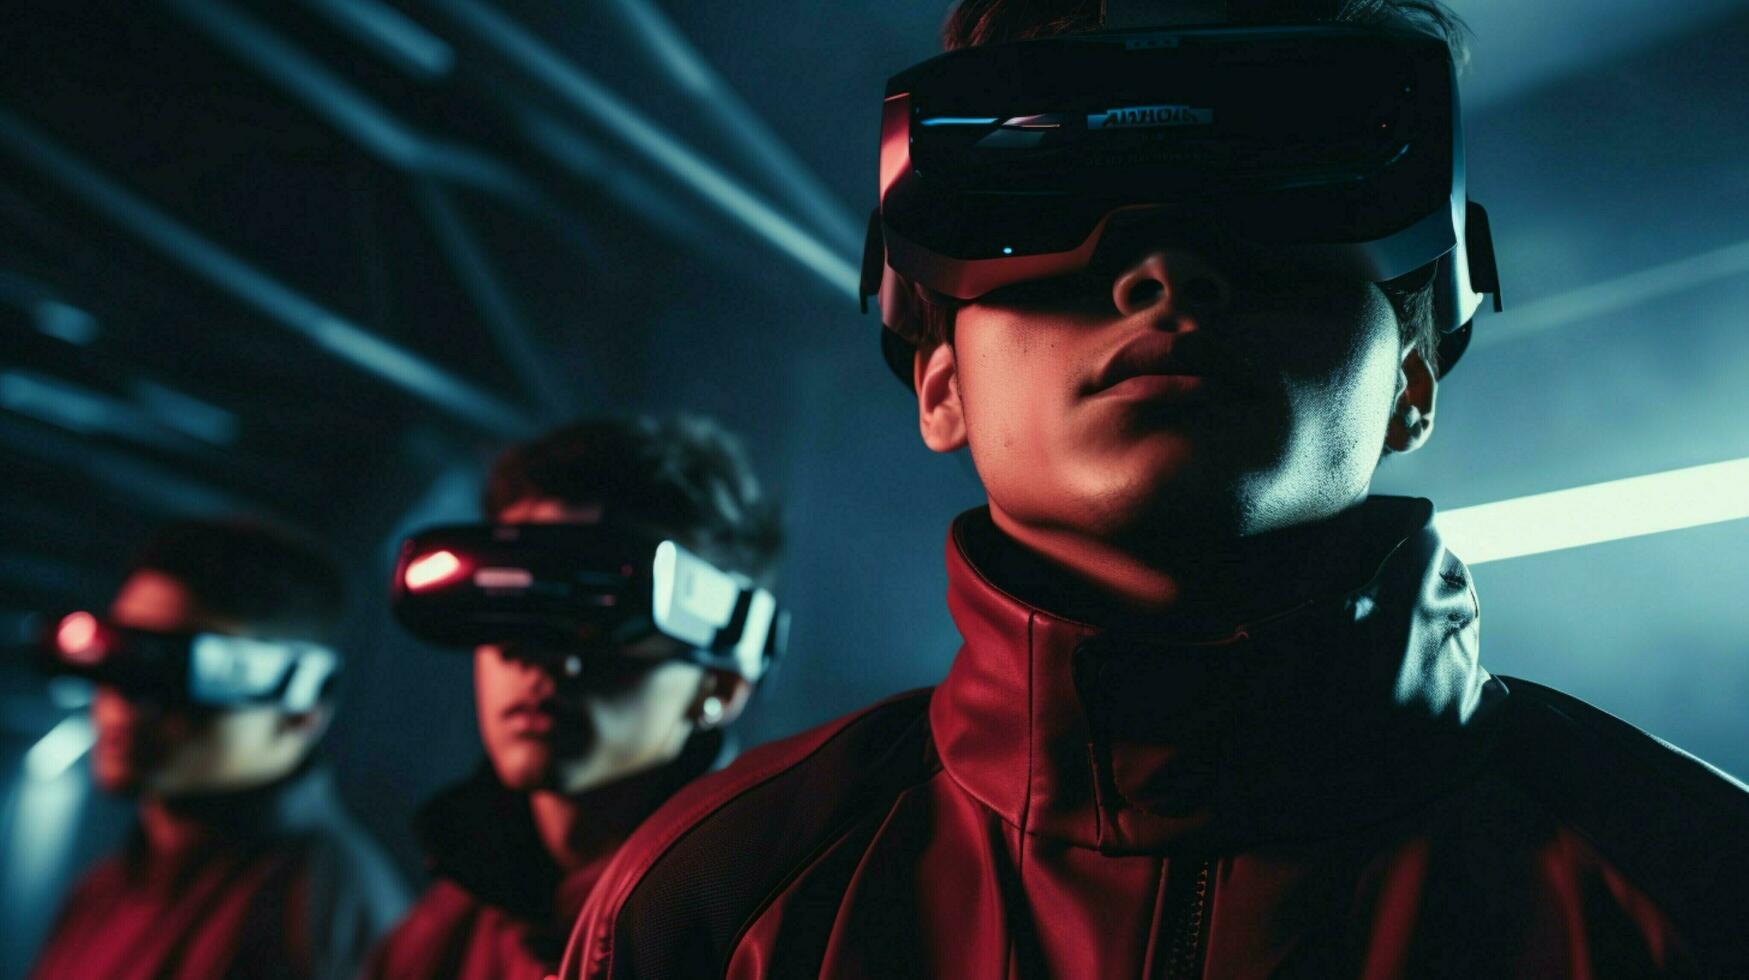 men in futuristic vr simulator wearing protective eyewear photo